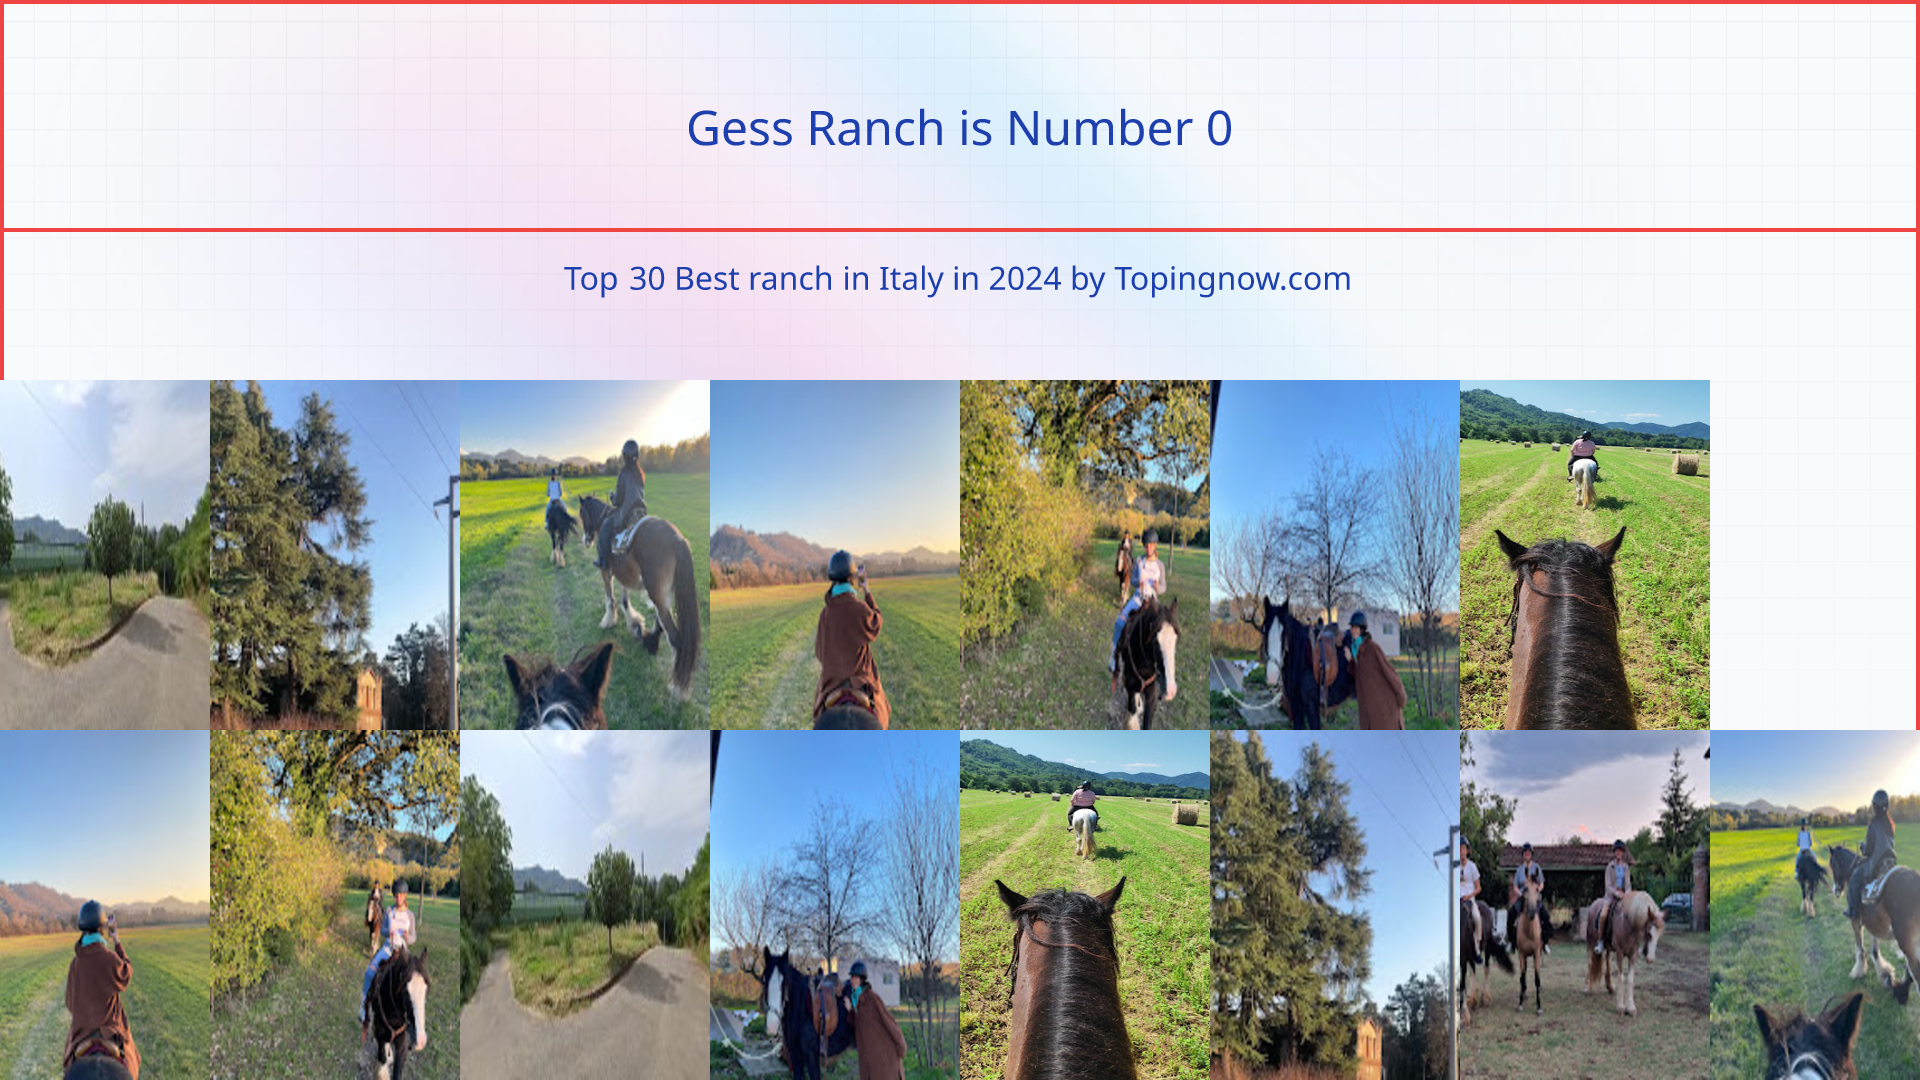 Gess Ranch: Top 30 Best ranch in Italy in 2024